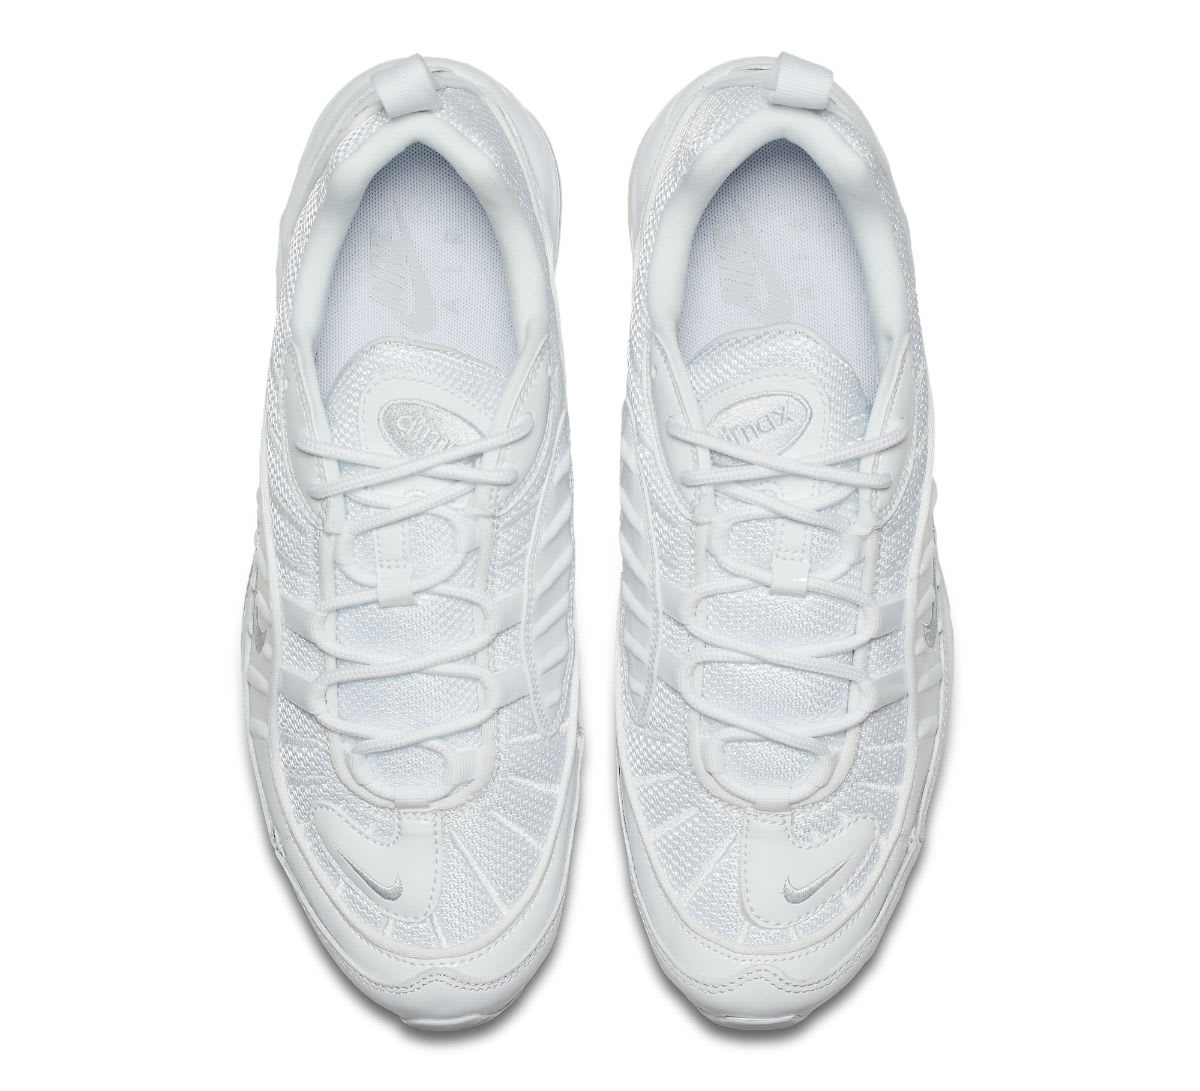 Nike Air Max 98 White Pure Platinum Release Date 640744-106 Top